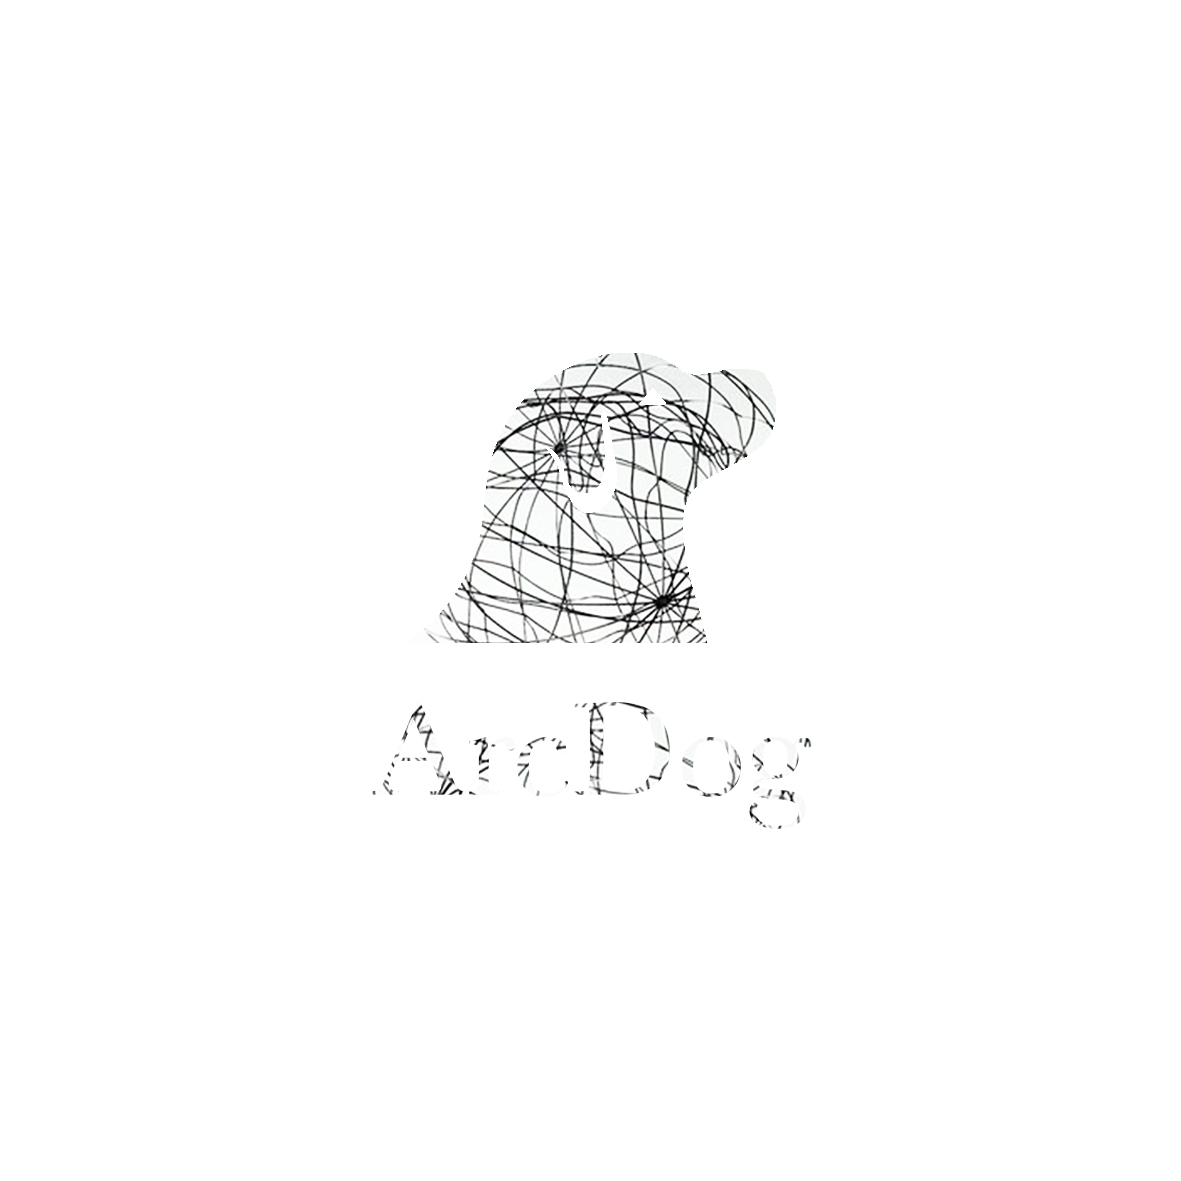 One day, one logo, one artist (#AntonyGormley). 2016/06/30.